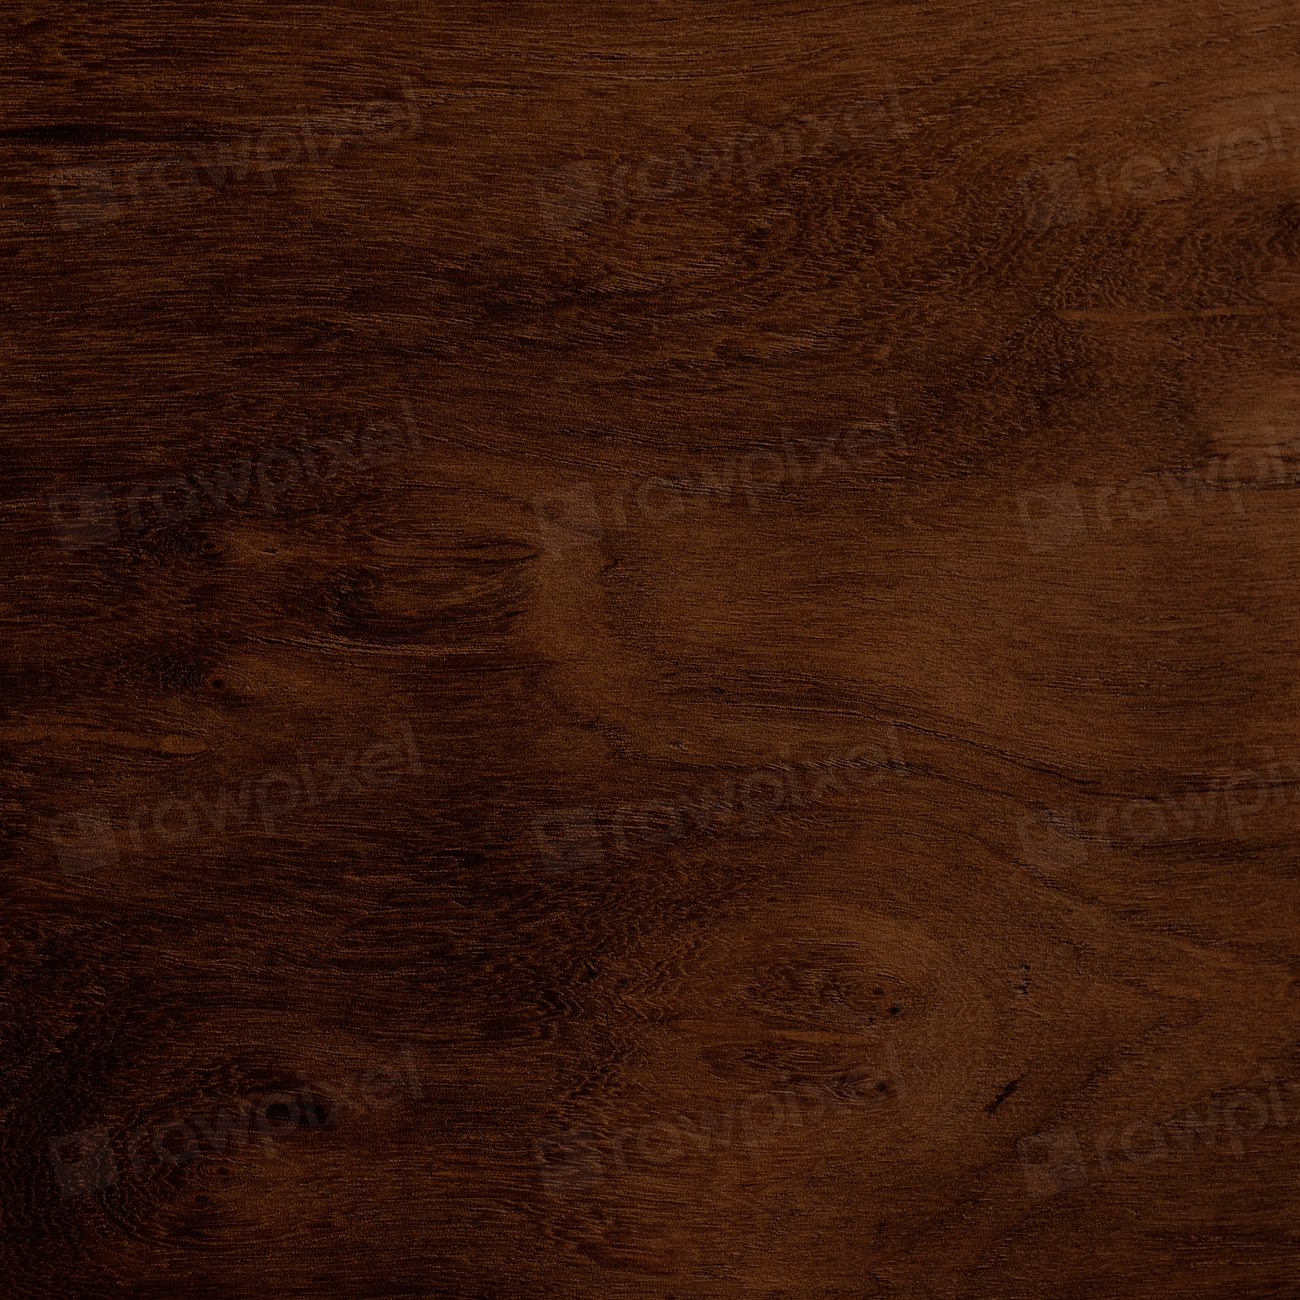 Brown Blank Walnut Wood Texture Premium Photo Rawpixel